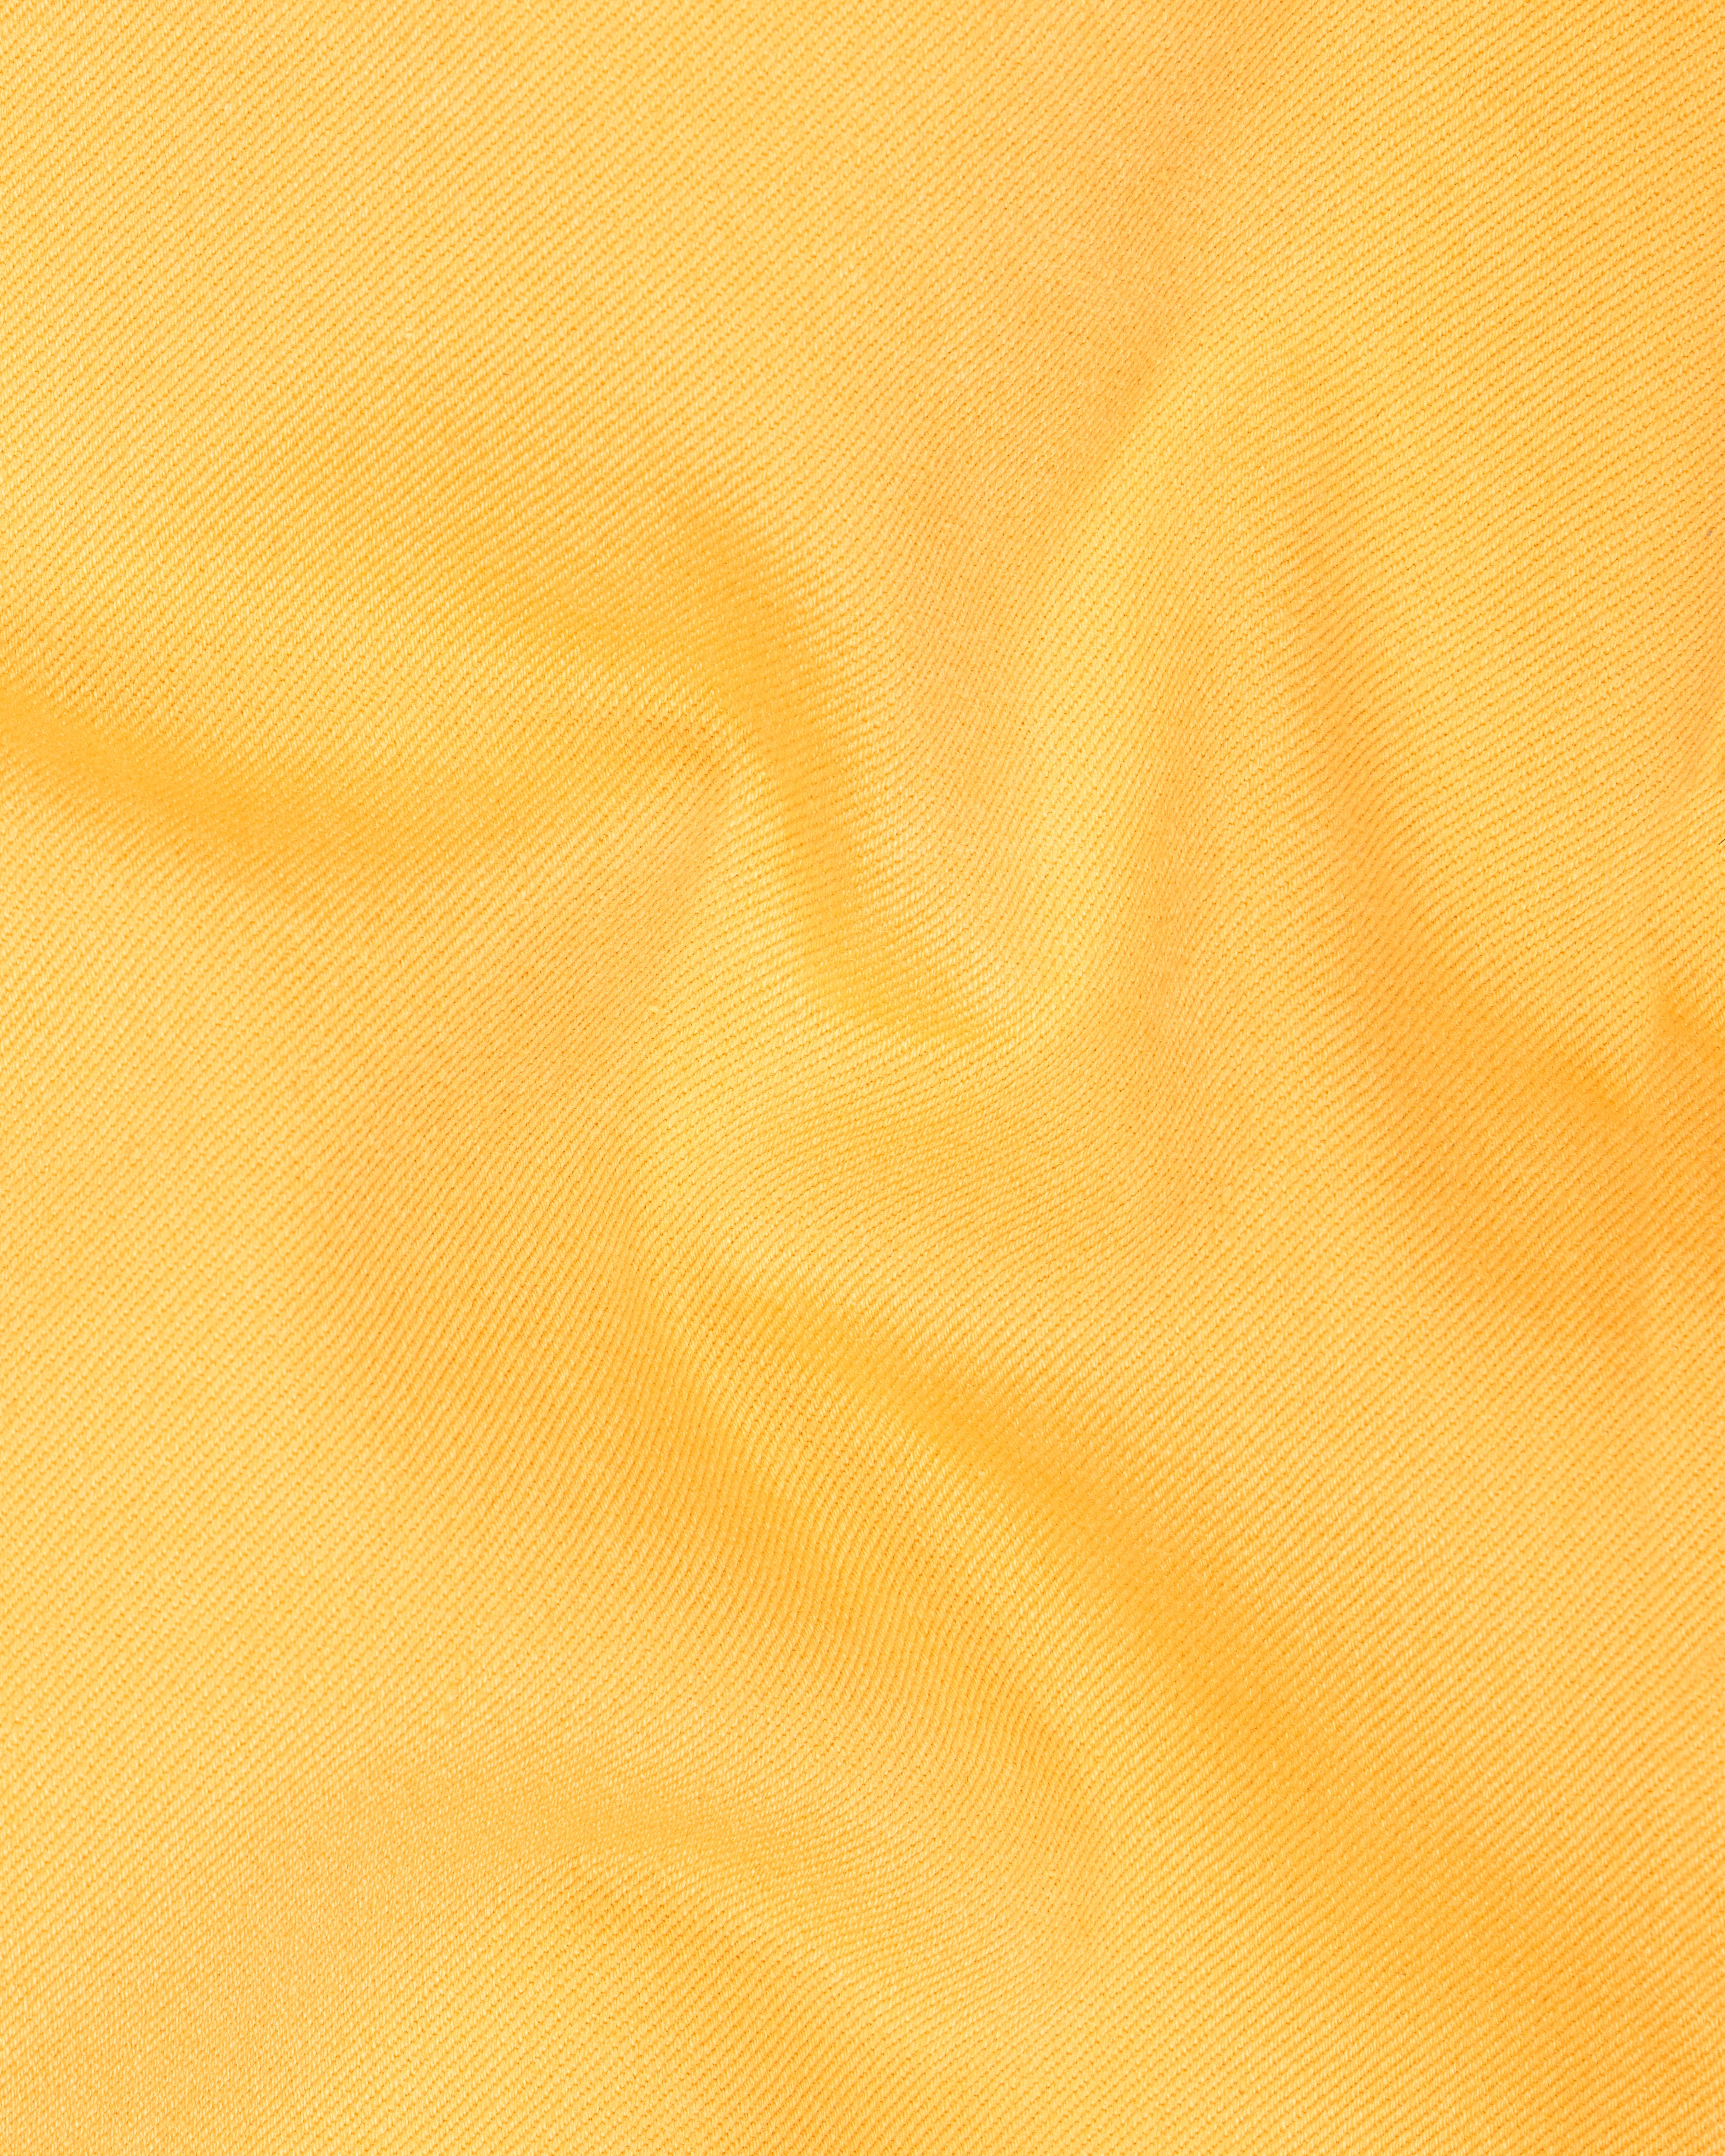 Apricot Yellow Rinse Wash Rinse Wash  Clean Look Stretchable Denim Shorts SR224-28, SR224-30, SR224-32, SR224-34, SR224-36, SR224-38, SR224-40, SR224-42, SR224-44